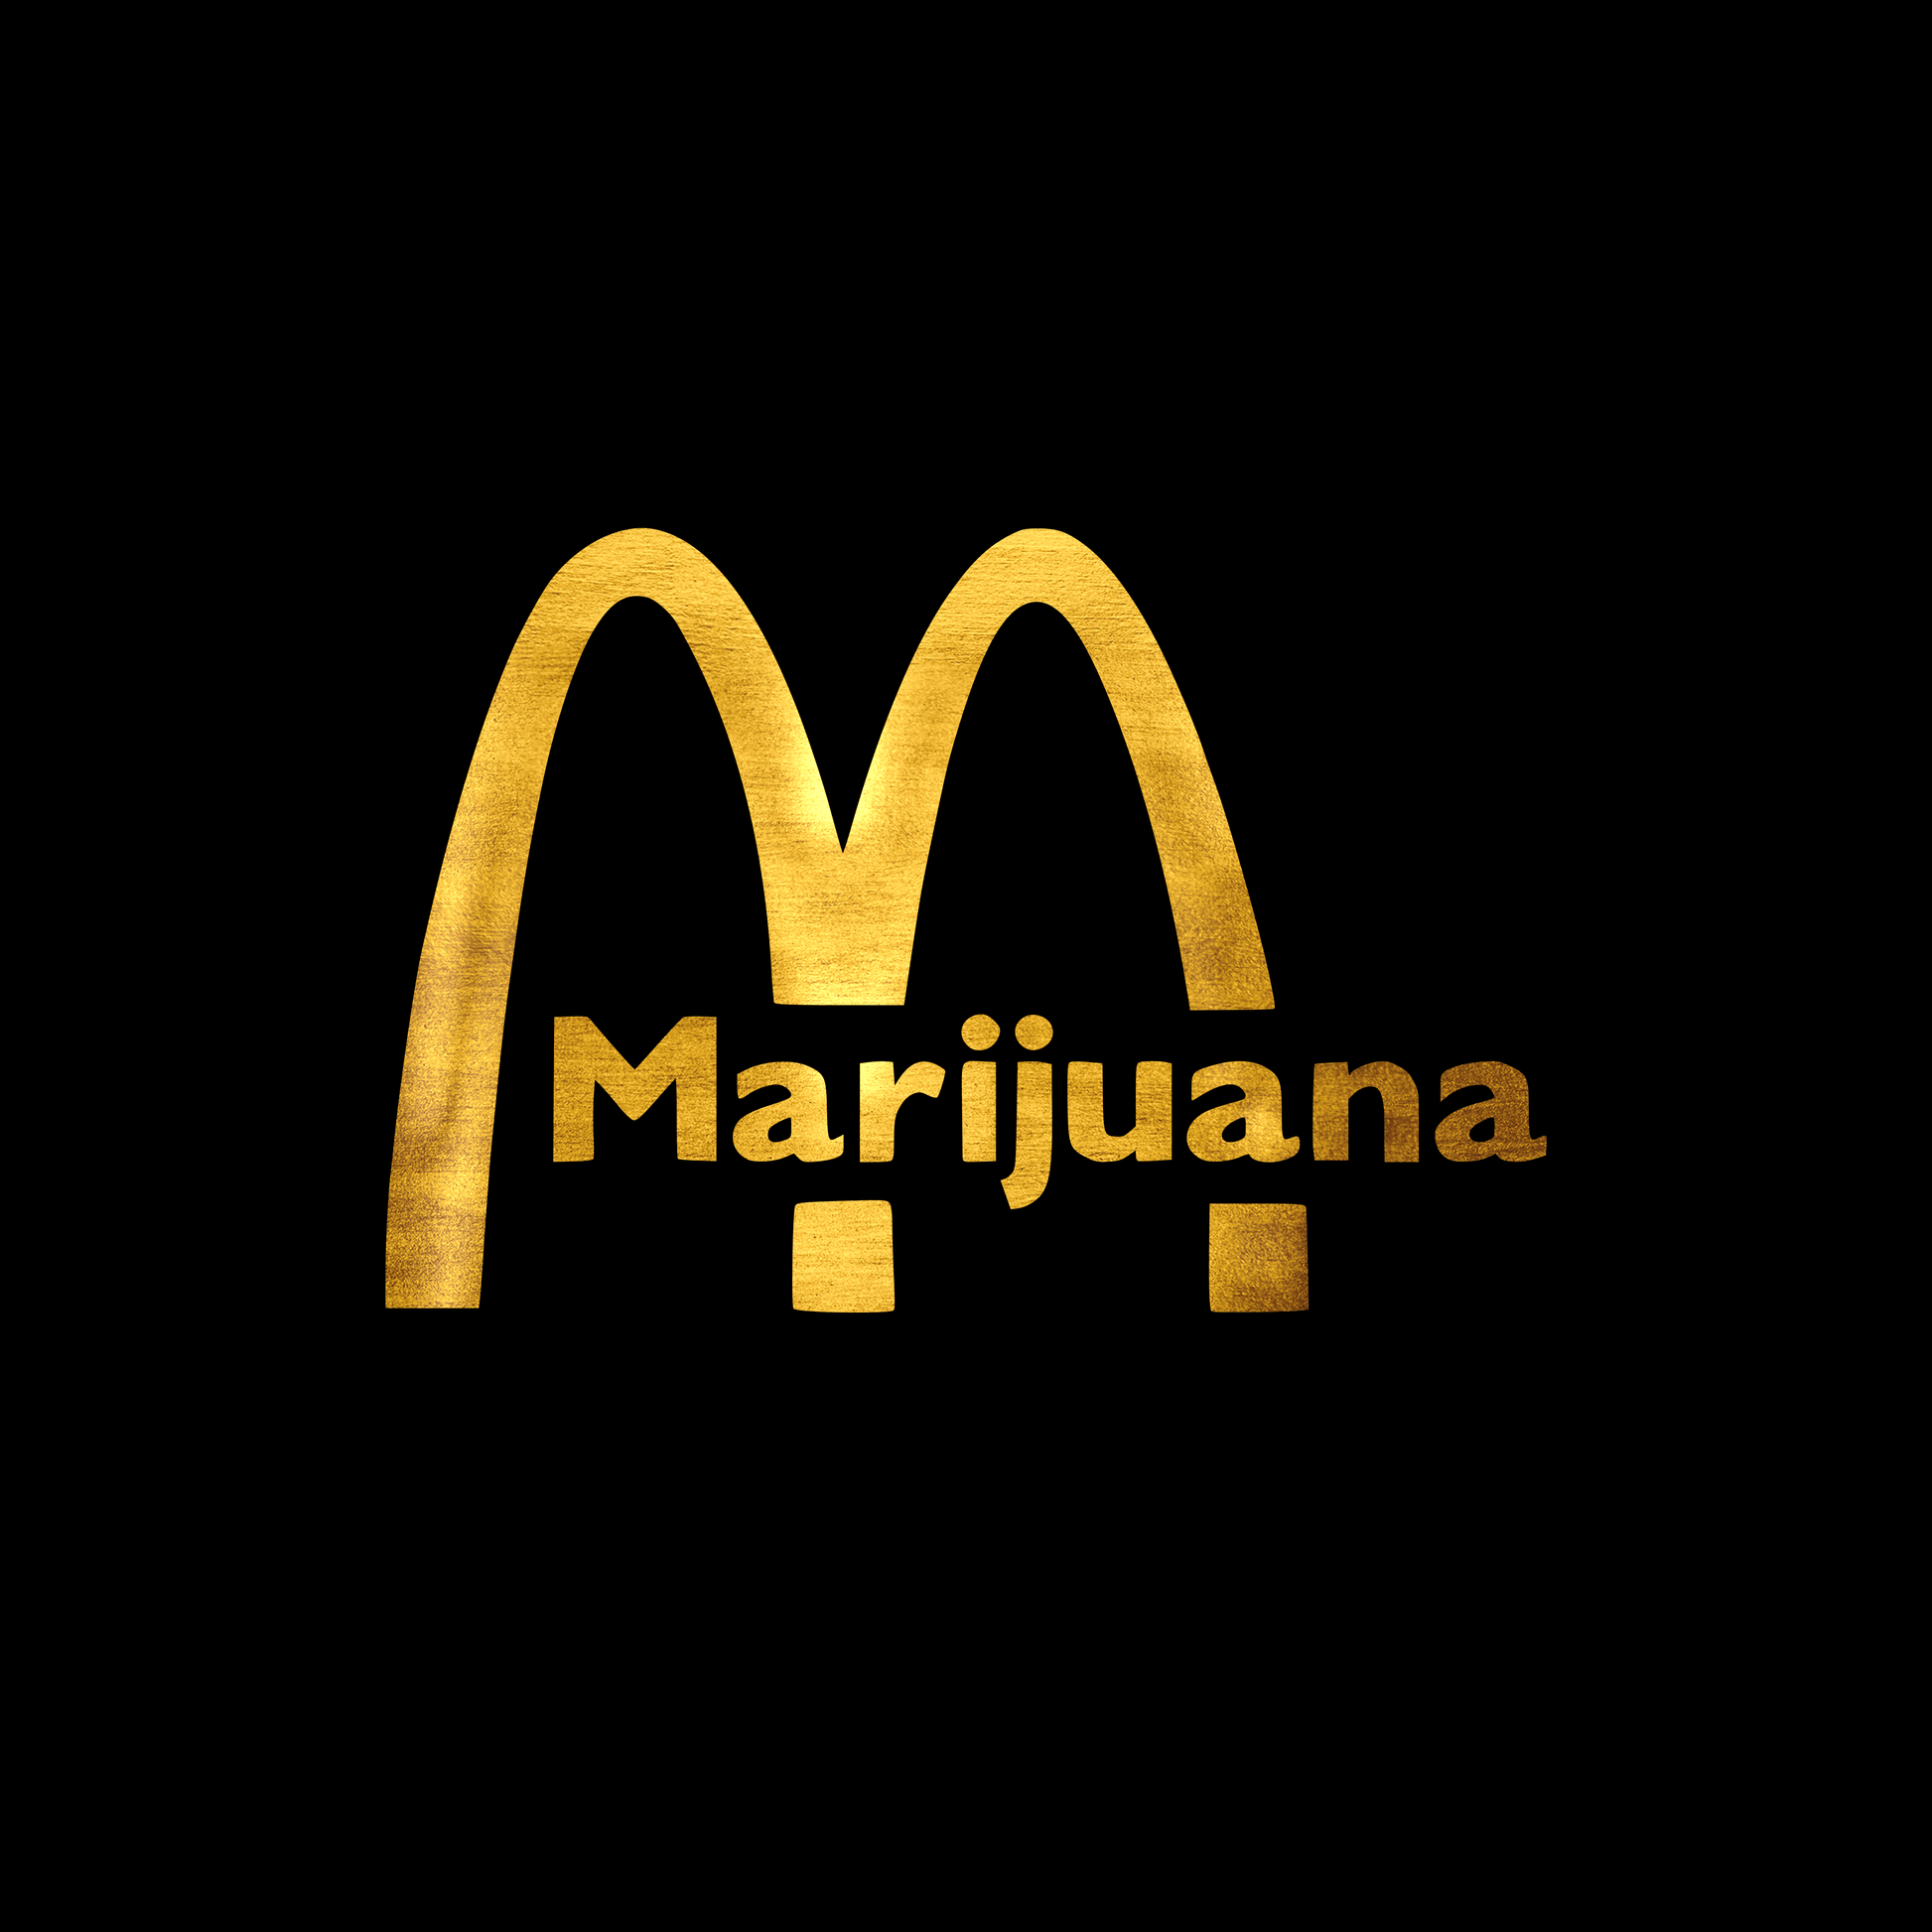 Marijuana sticker decal